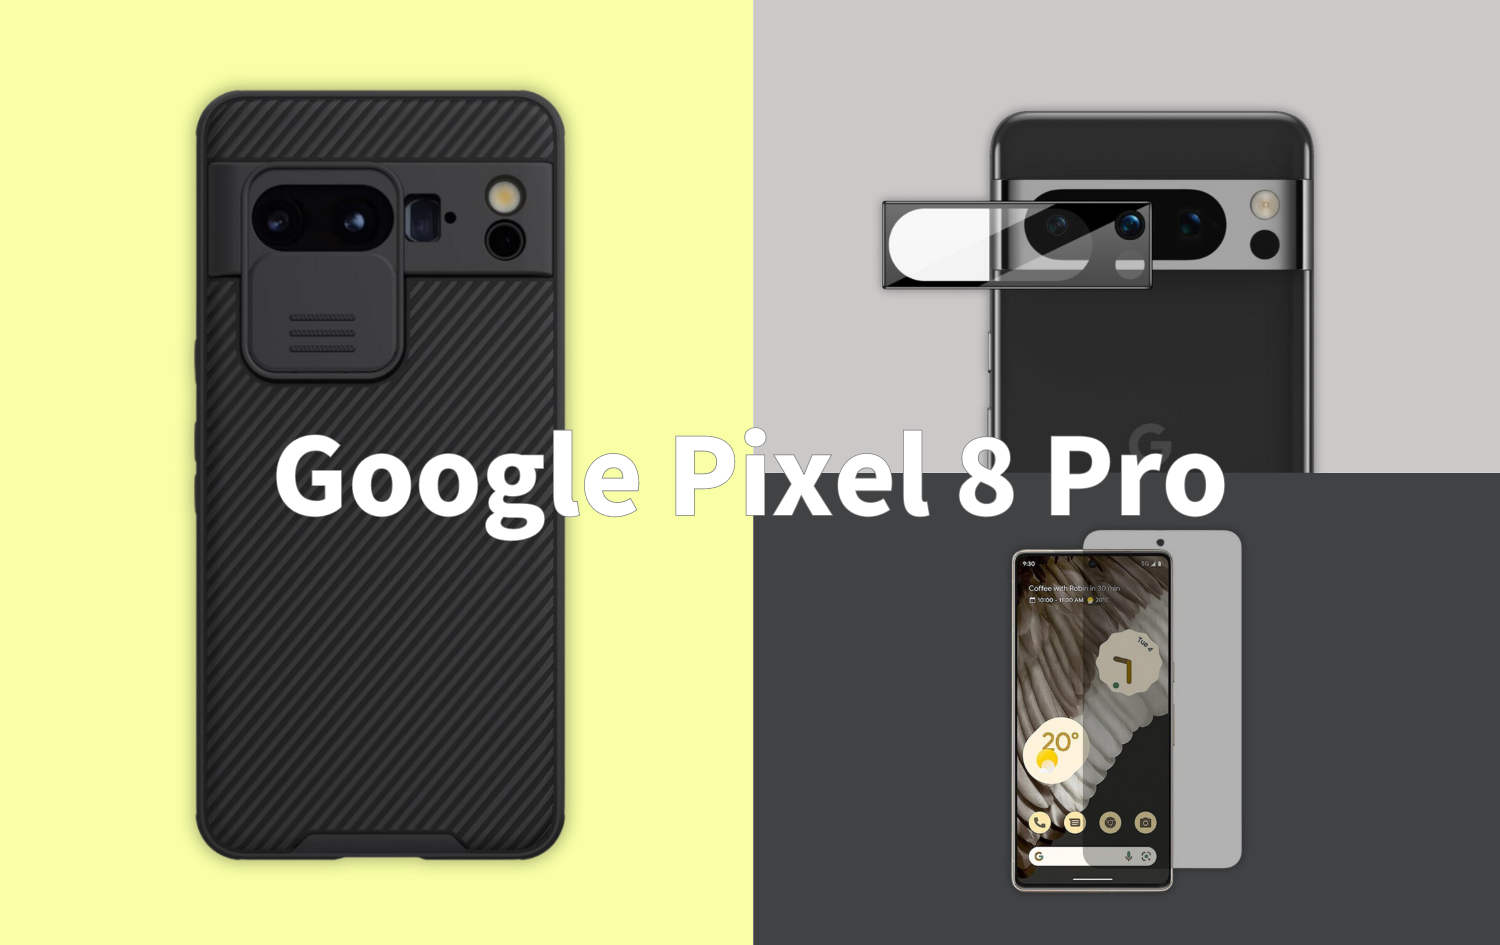 https://www.phone-life.it/pub_docs/files/Pixel-8-Pro.png